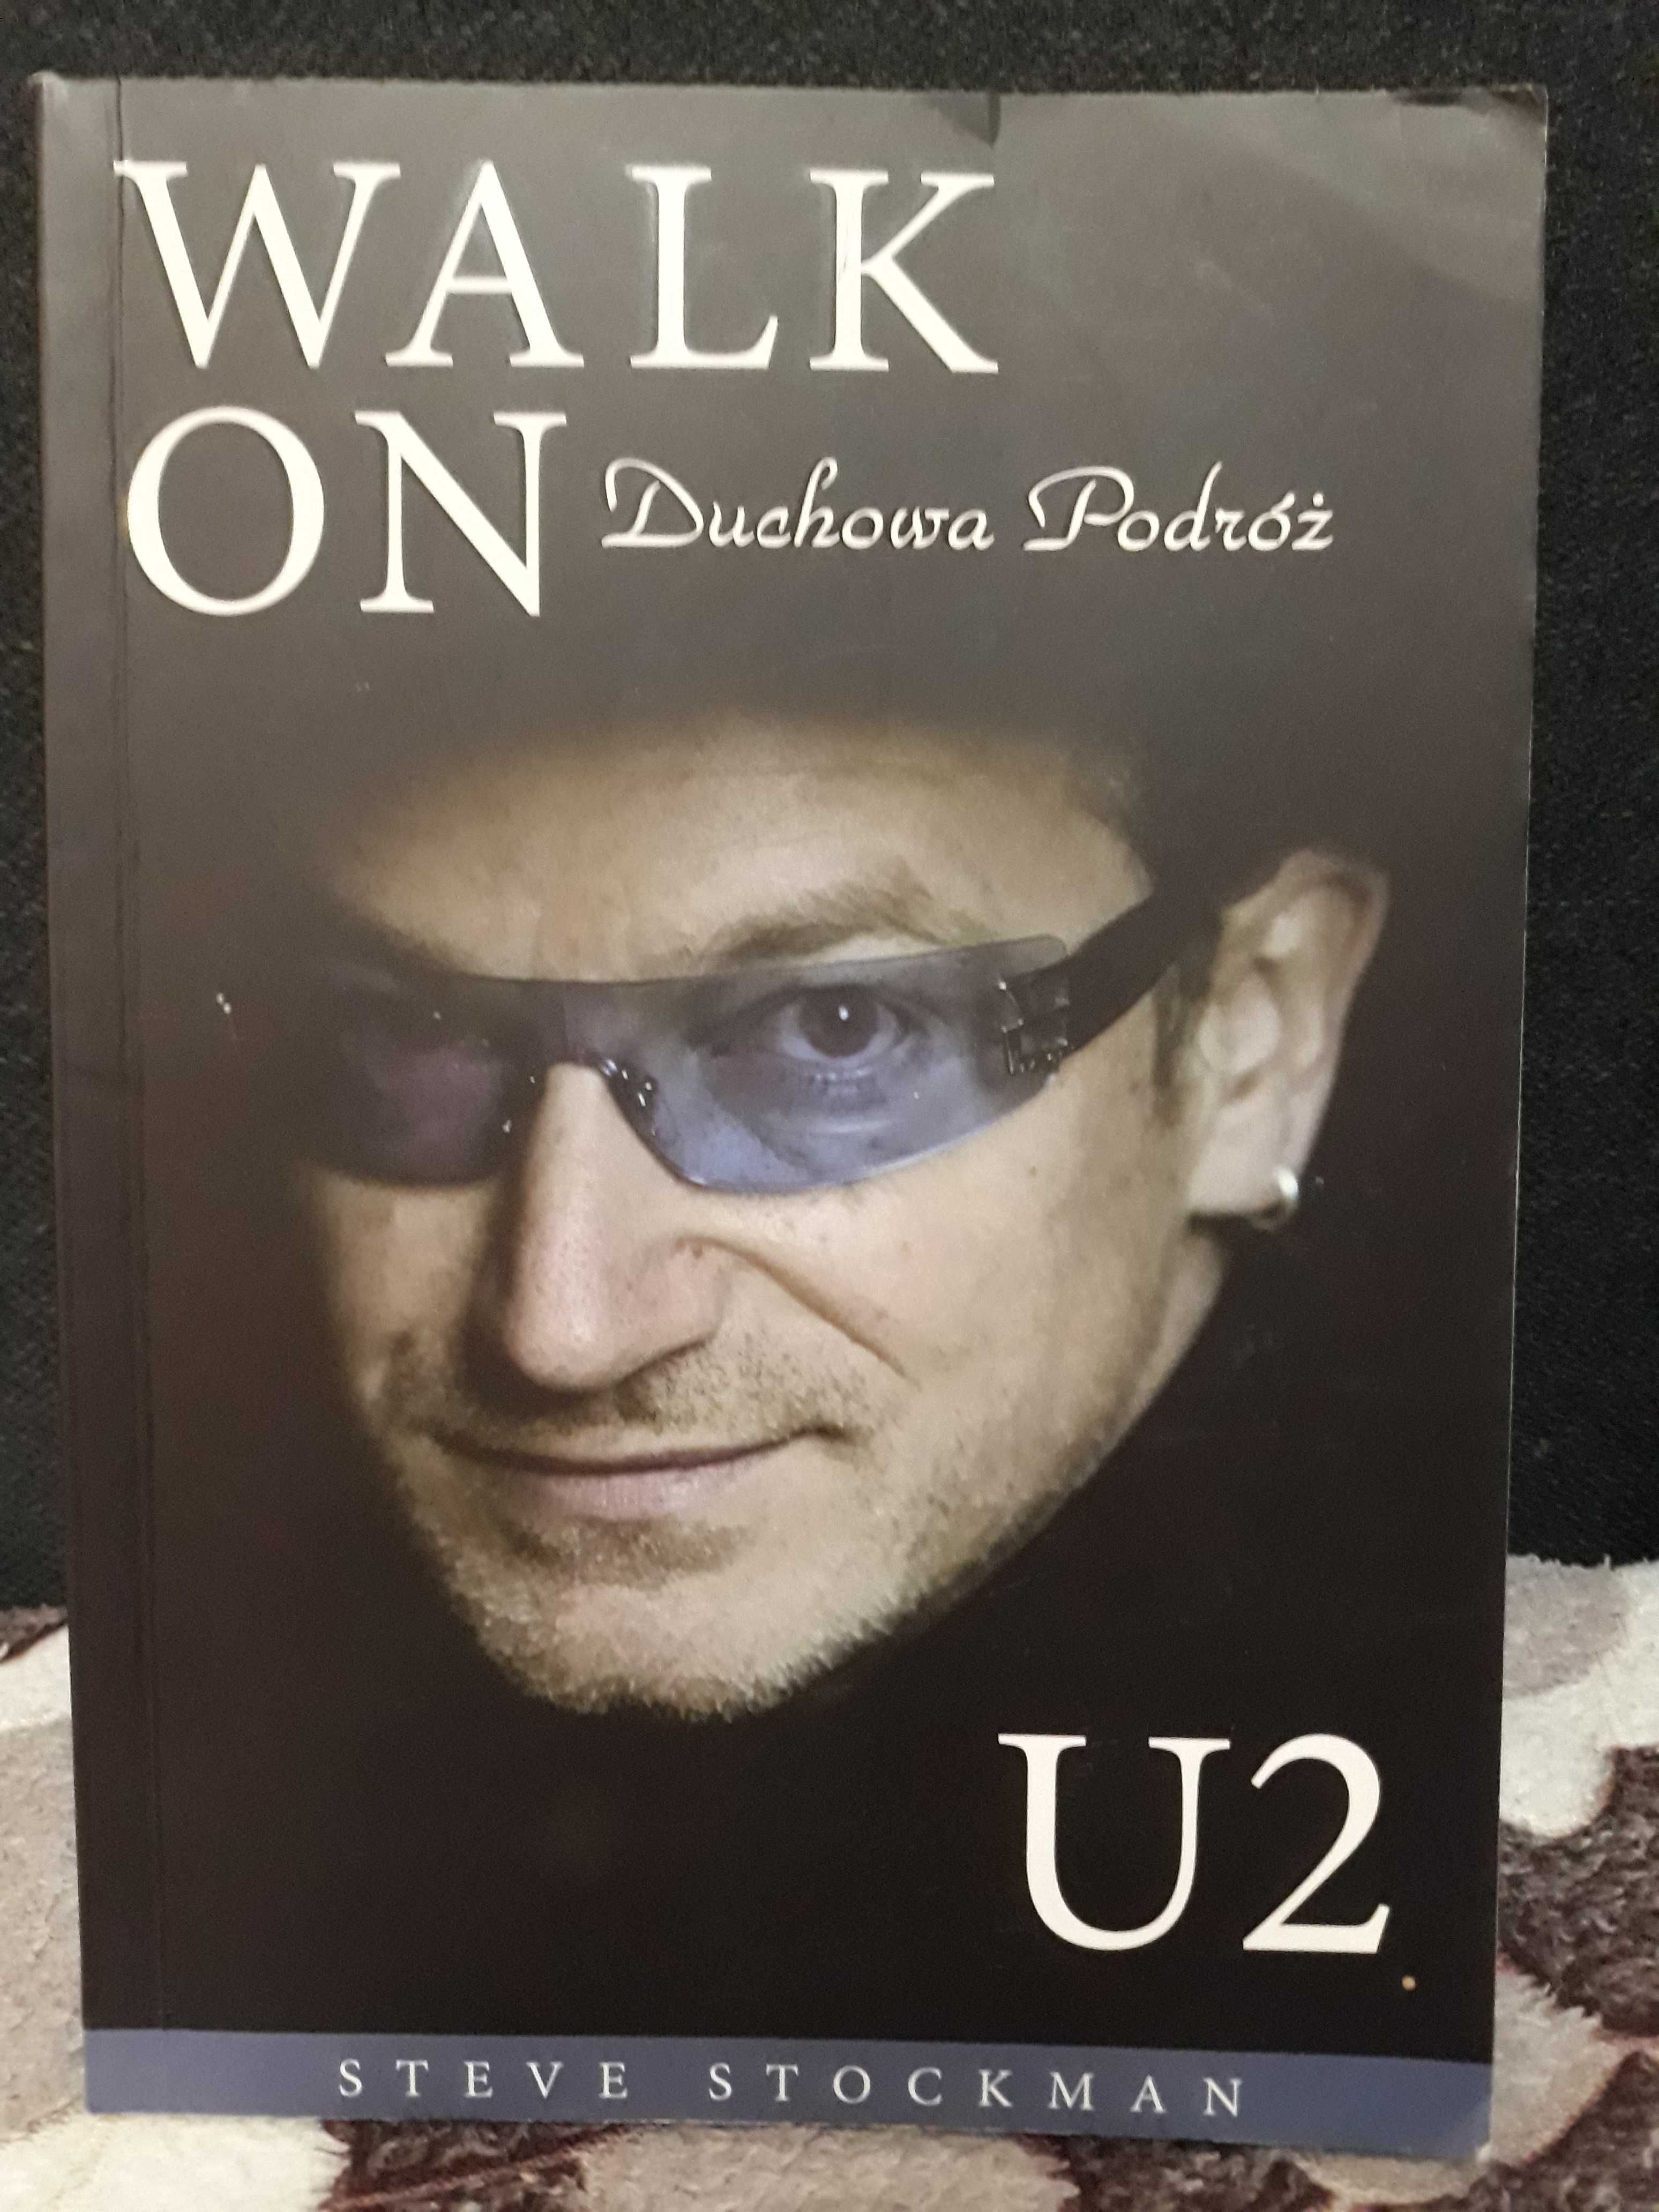 Książka "Walk on - duchowa podróż U2" Bono